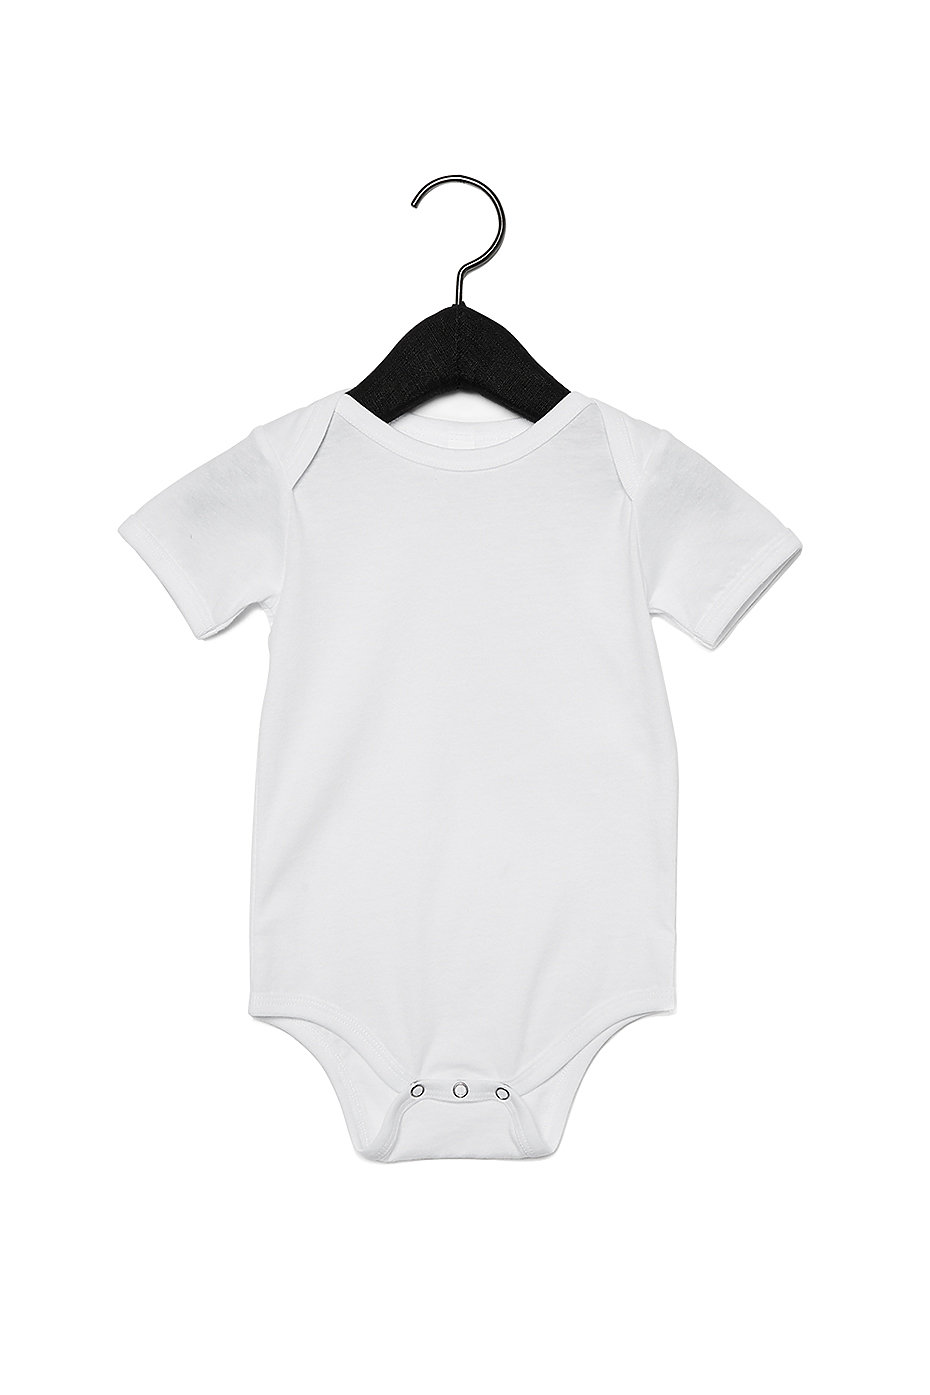 infant jersey onesie